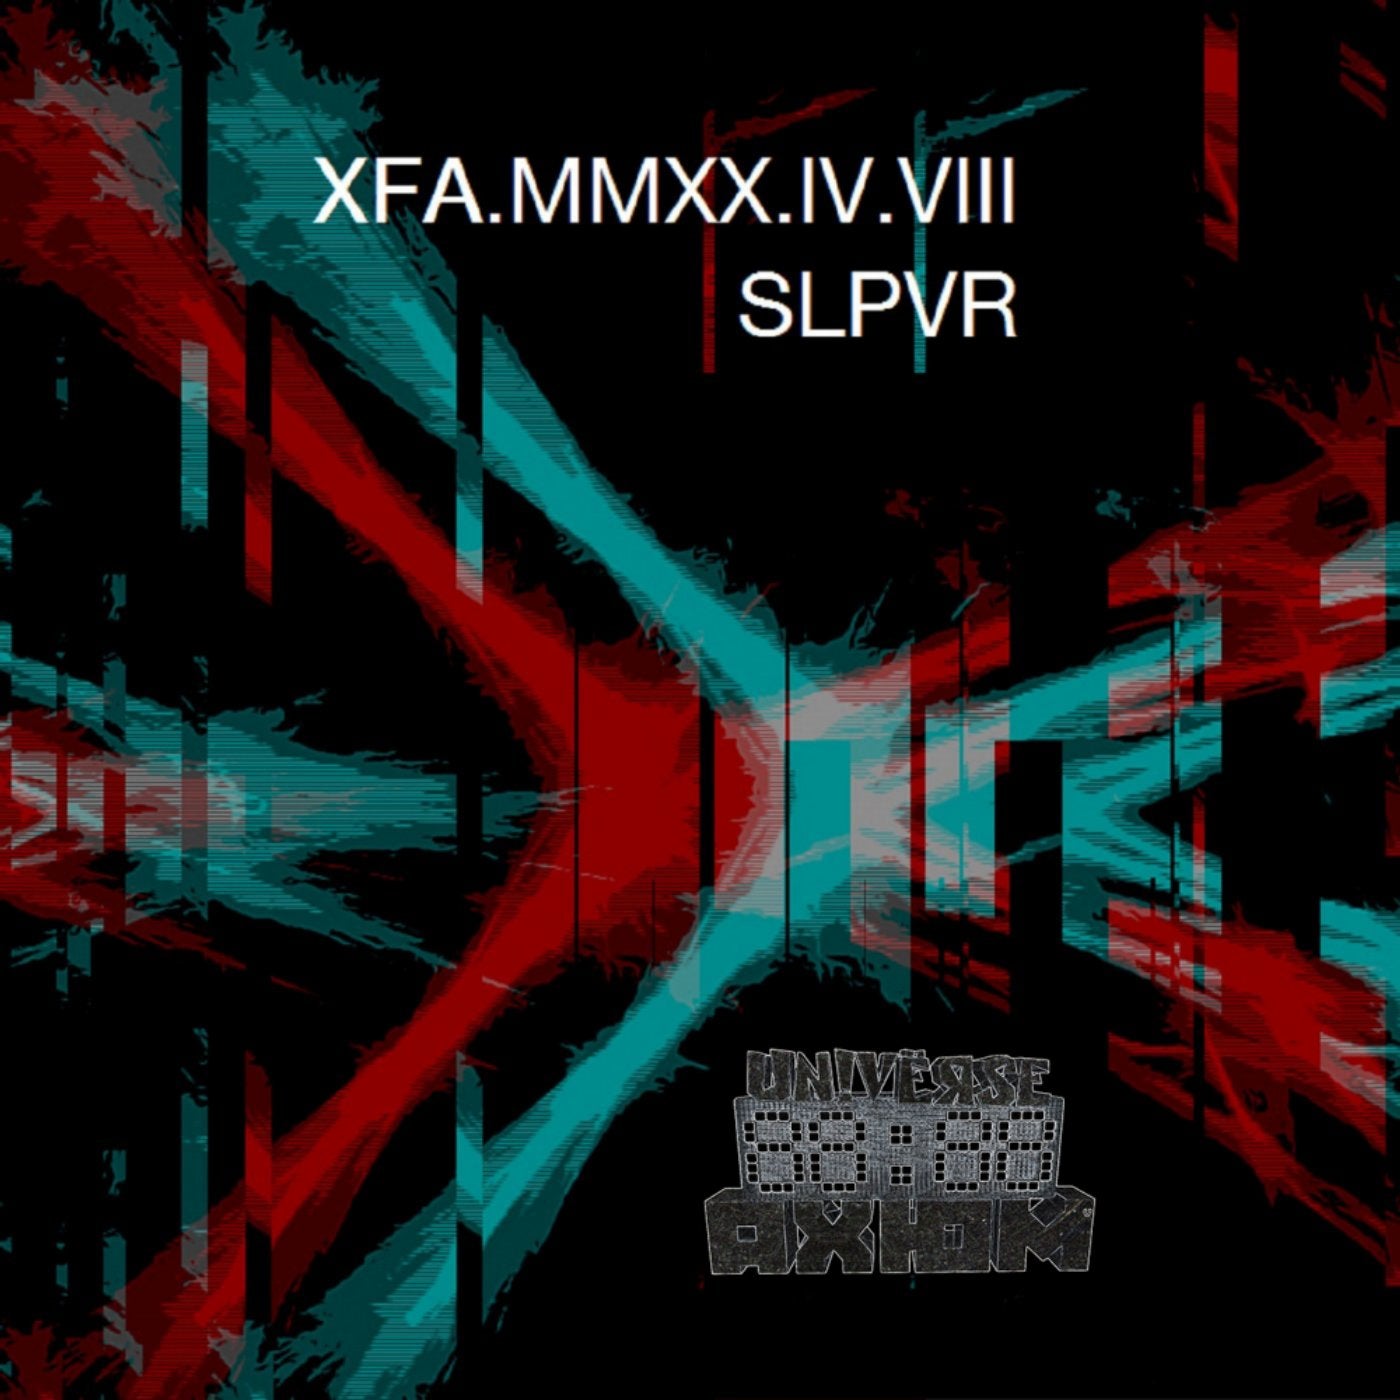 MMXX.IV.VIII.SLPVR